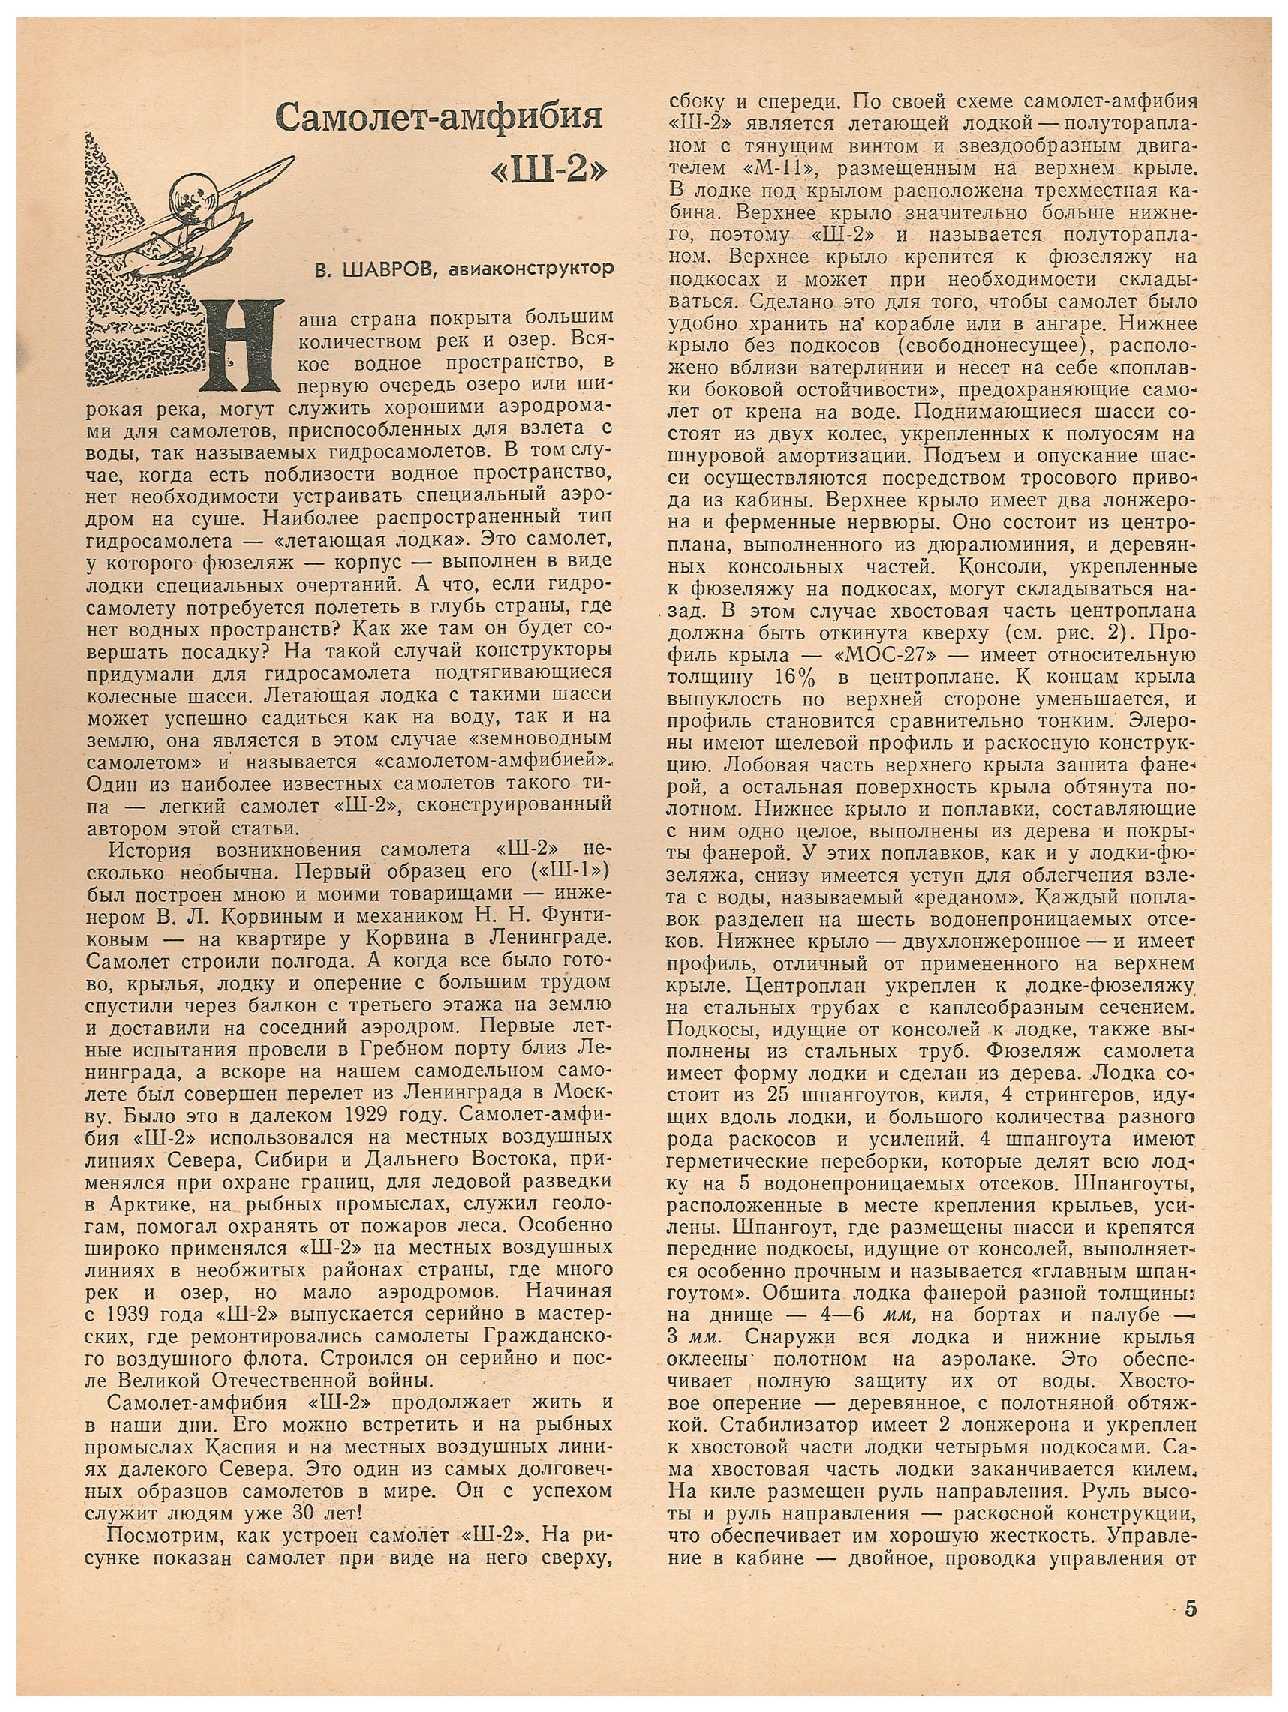 ЮМК 1, 1962, 5 c.